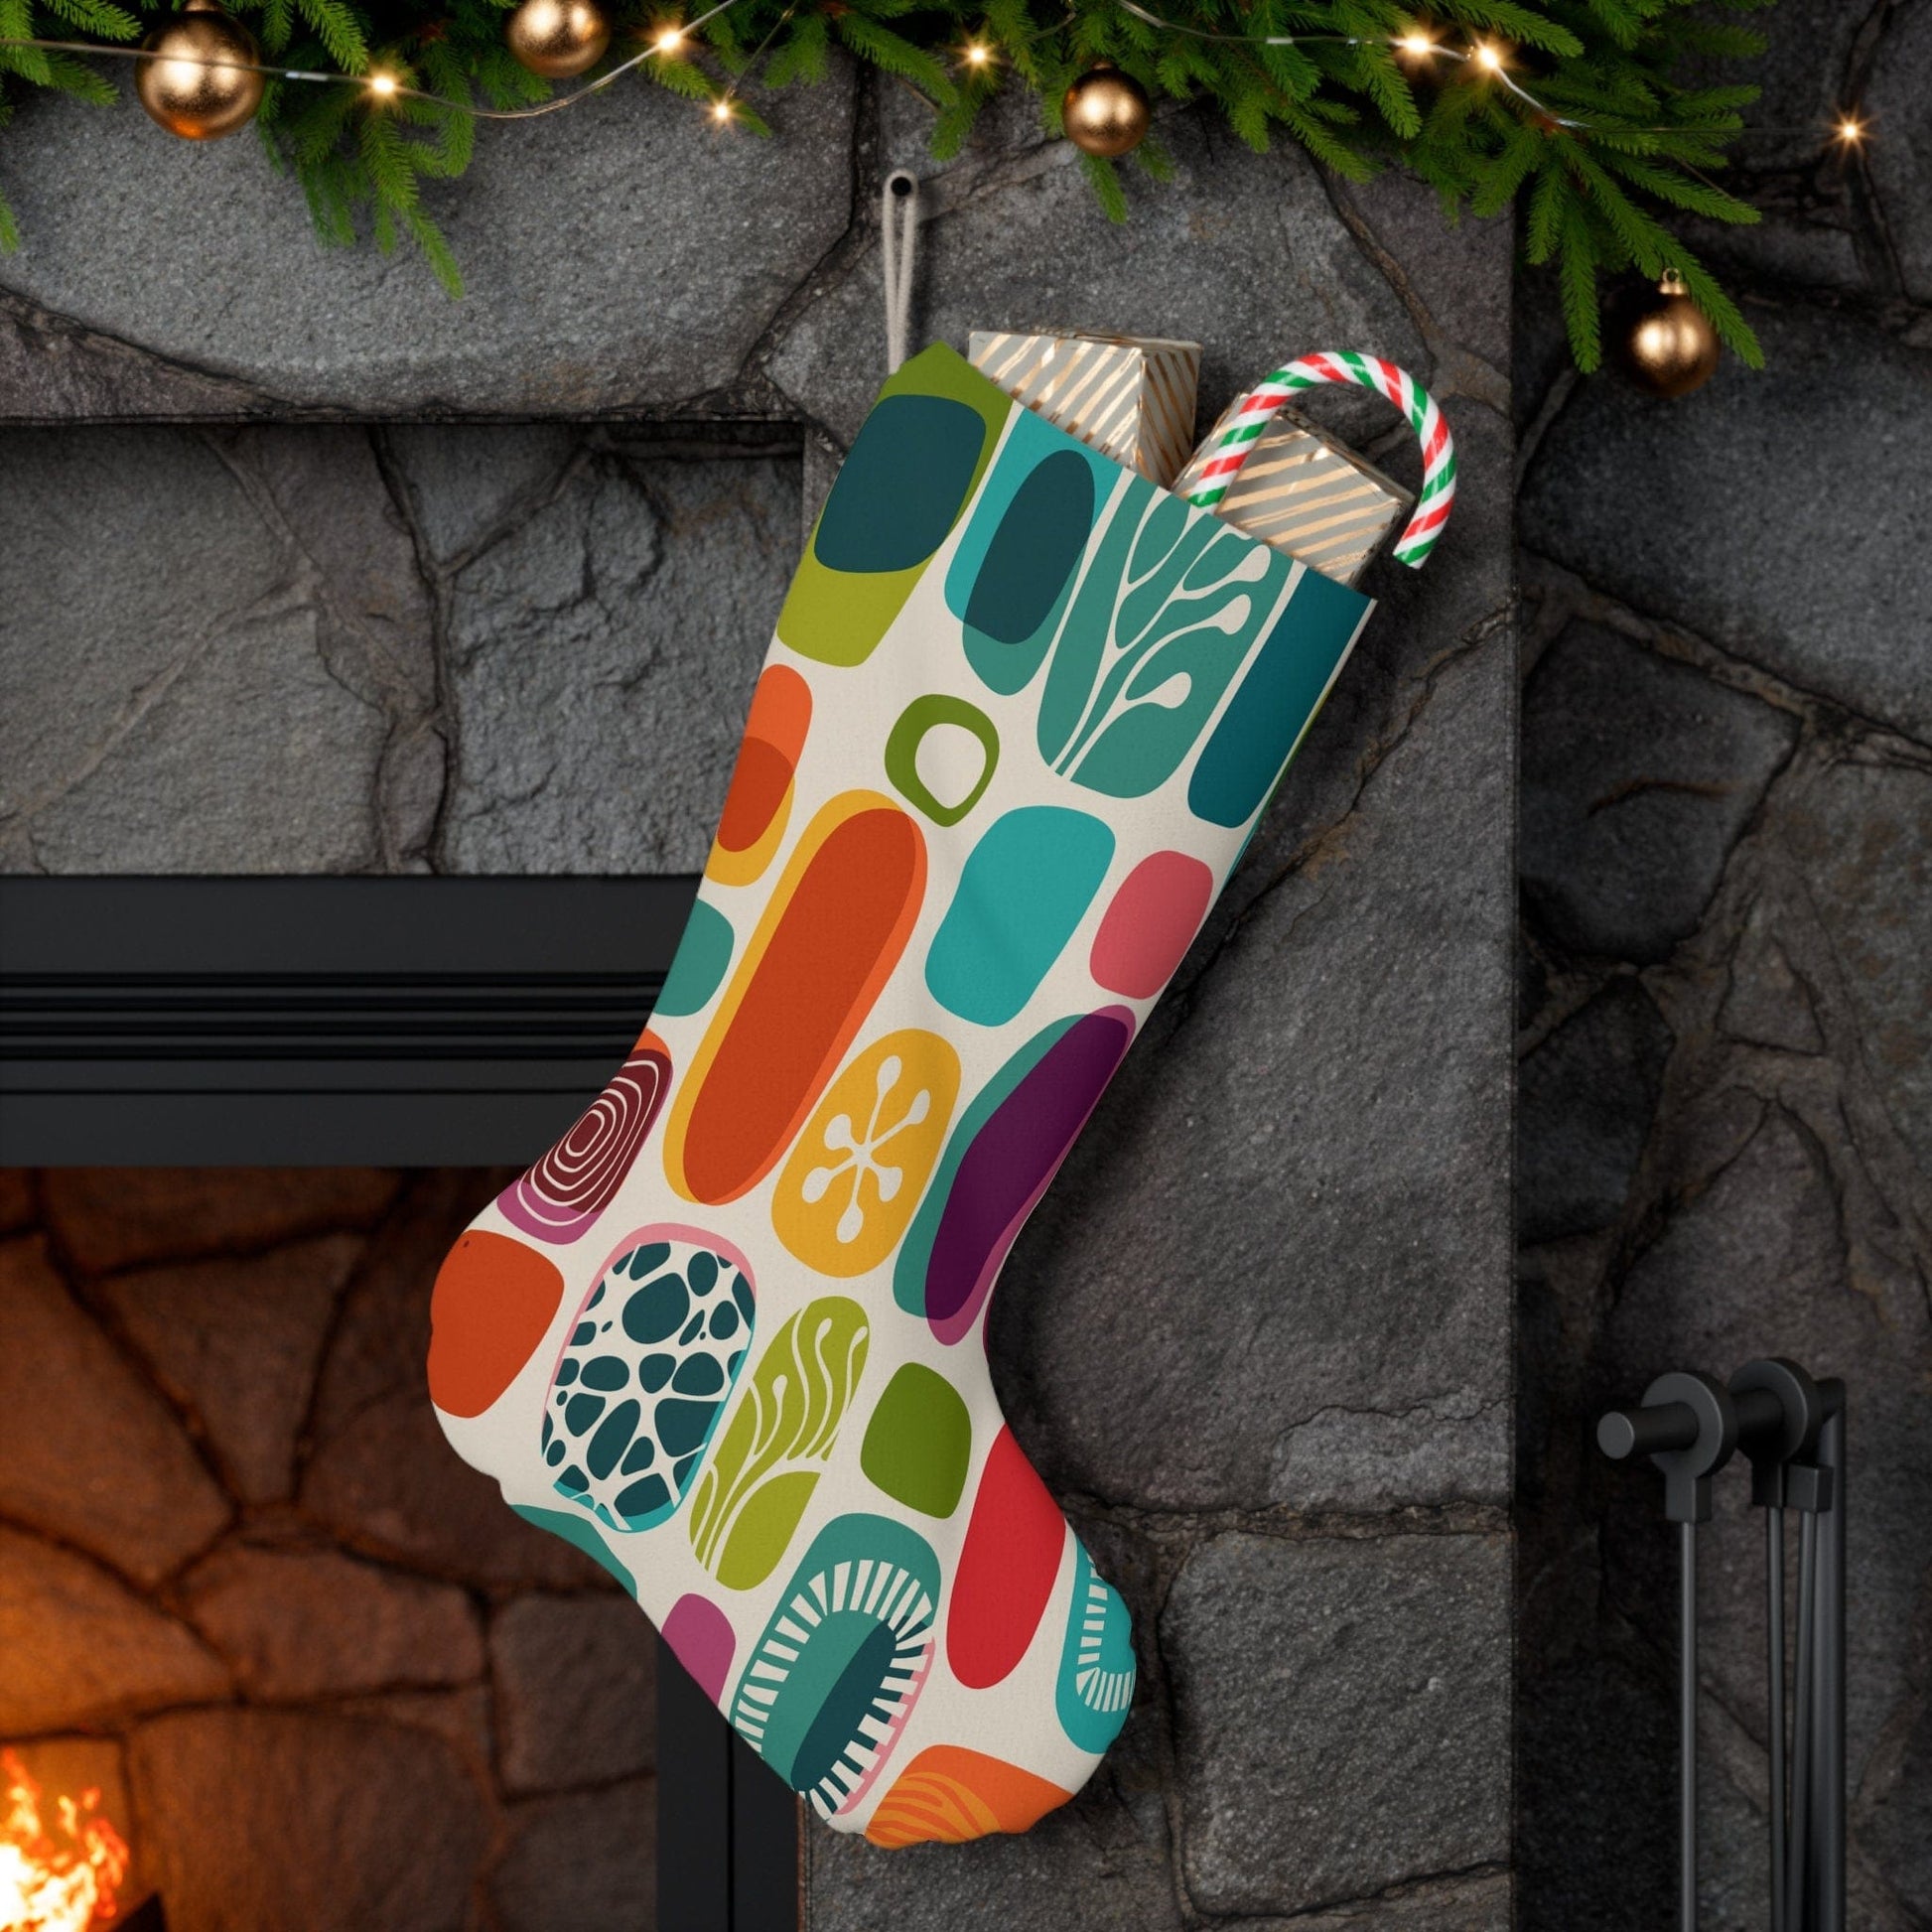 Kate McEnroe New York Mid Century Modern Amoeba Holiday Stockings, MCM Geometric Abstract Googie Christmas Mantle Decoration - KM13719723 Holiday Stockings 26155614466100844798